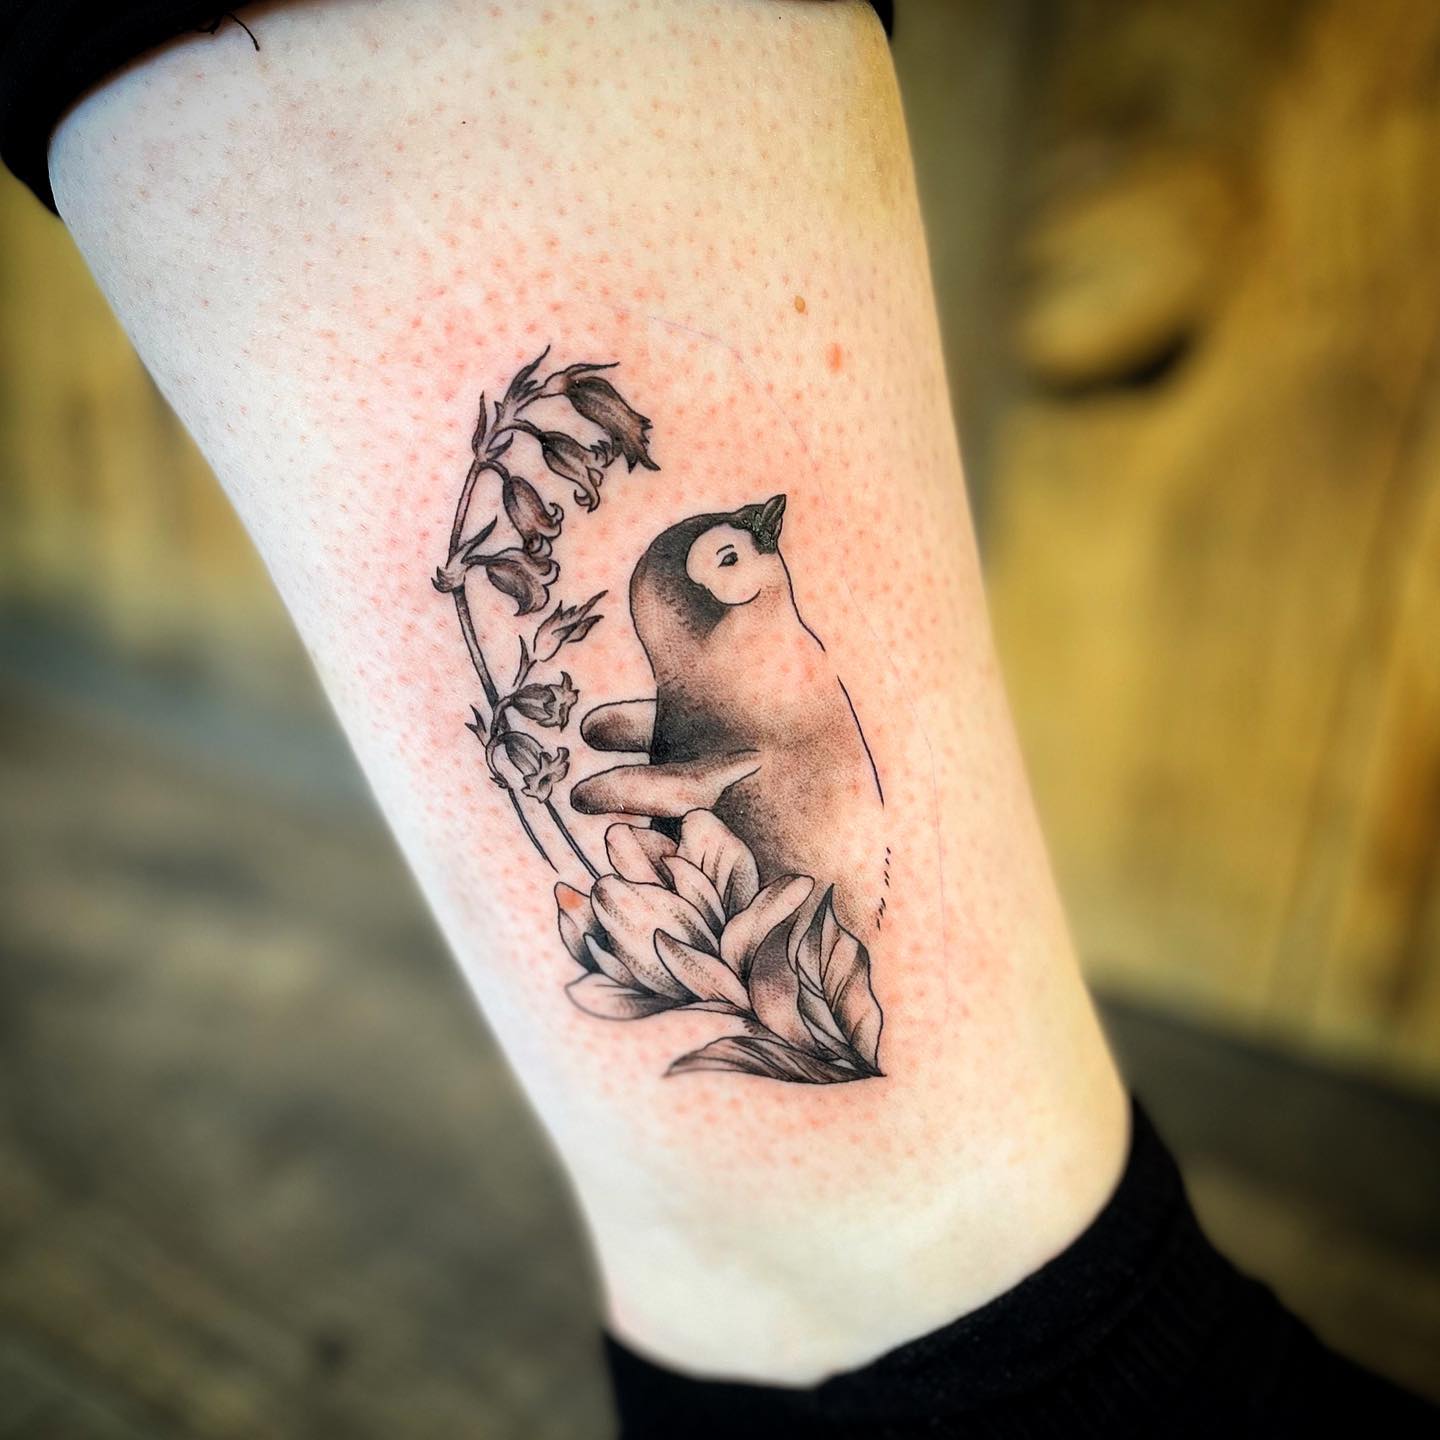 Tiny penguin tattoo on the bicep